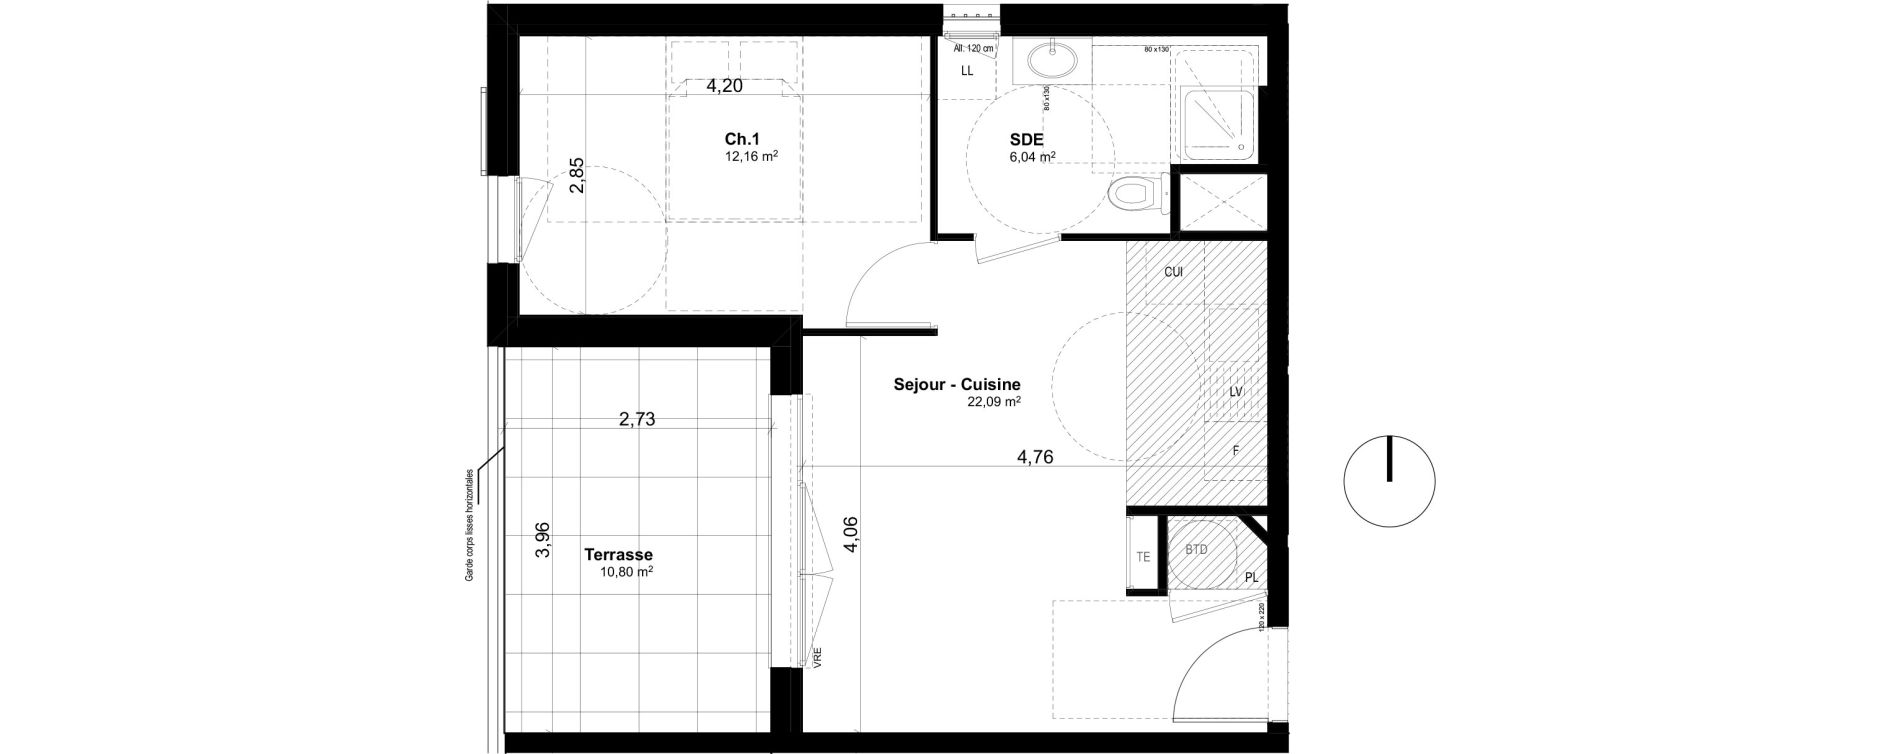 Appartement T2 de 40,29 m2 &agrave; Ventabren L heritiere